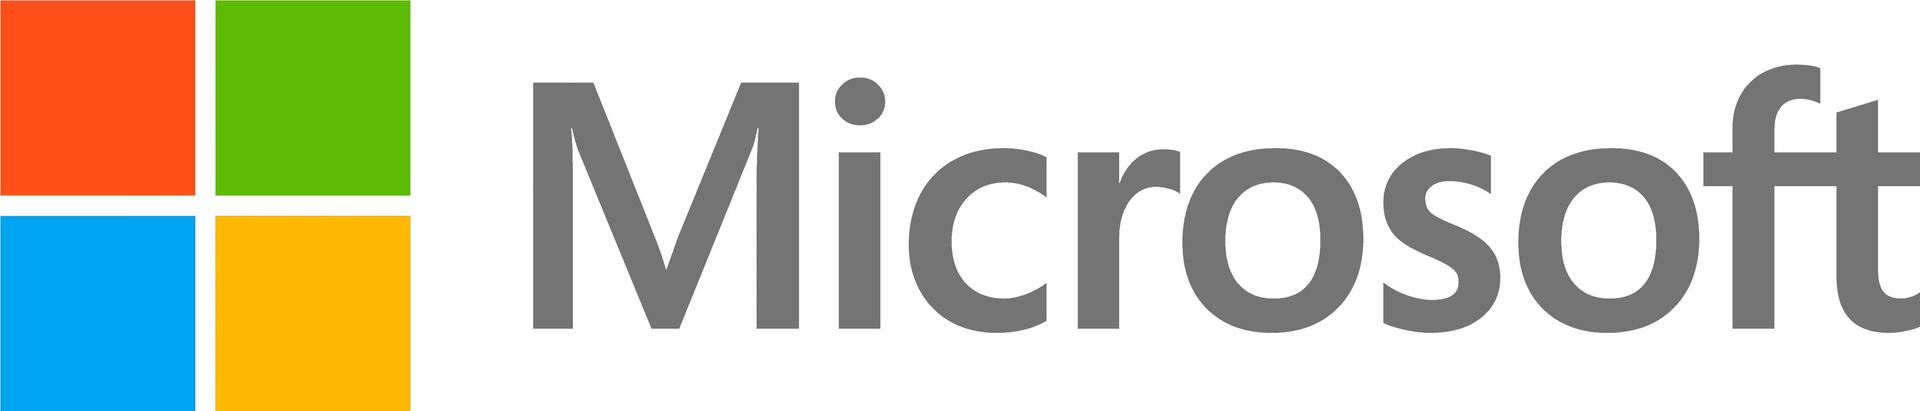 Microsoft DG7GMGF0MF3T.0001 Software-Lizenz/-Upgrade 1 Lizenz(en) (DG7GMGF0MF3T.0001)